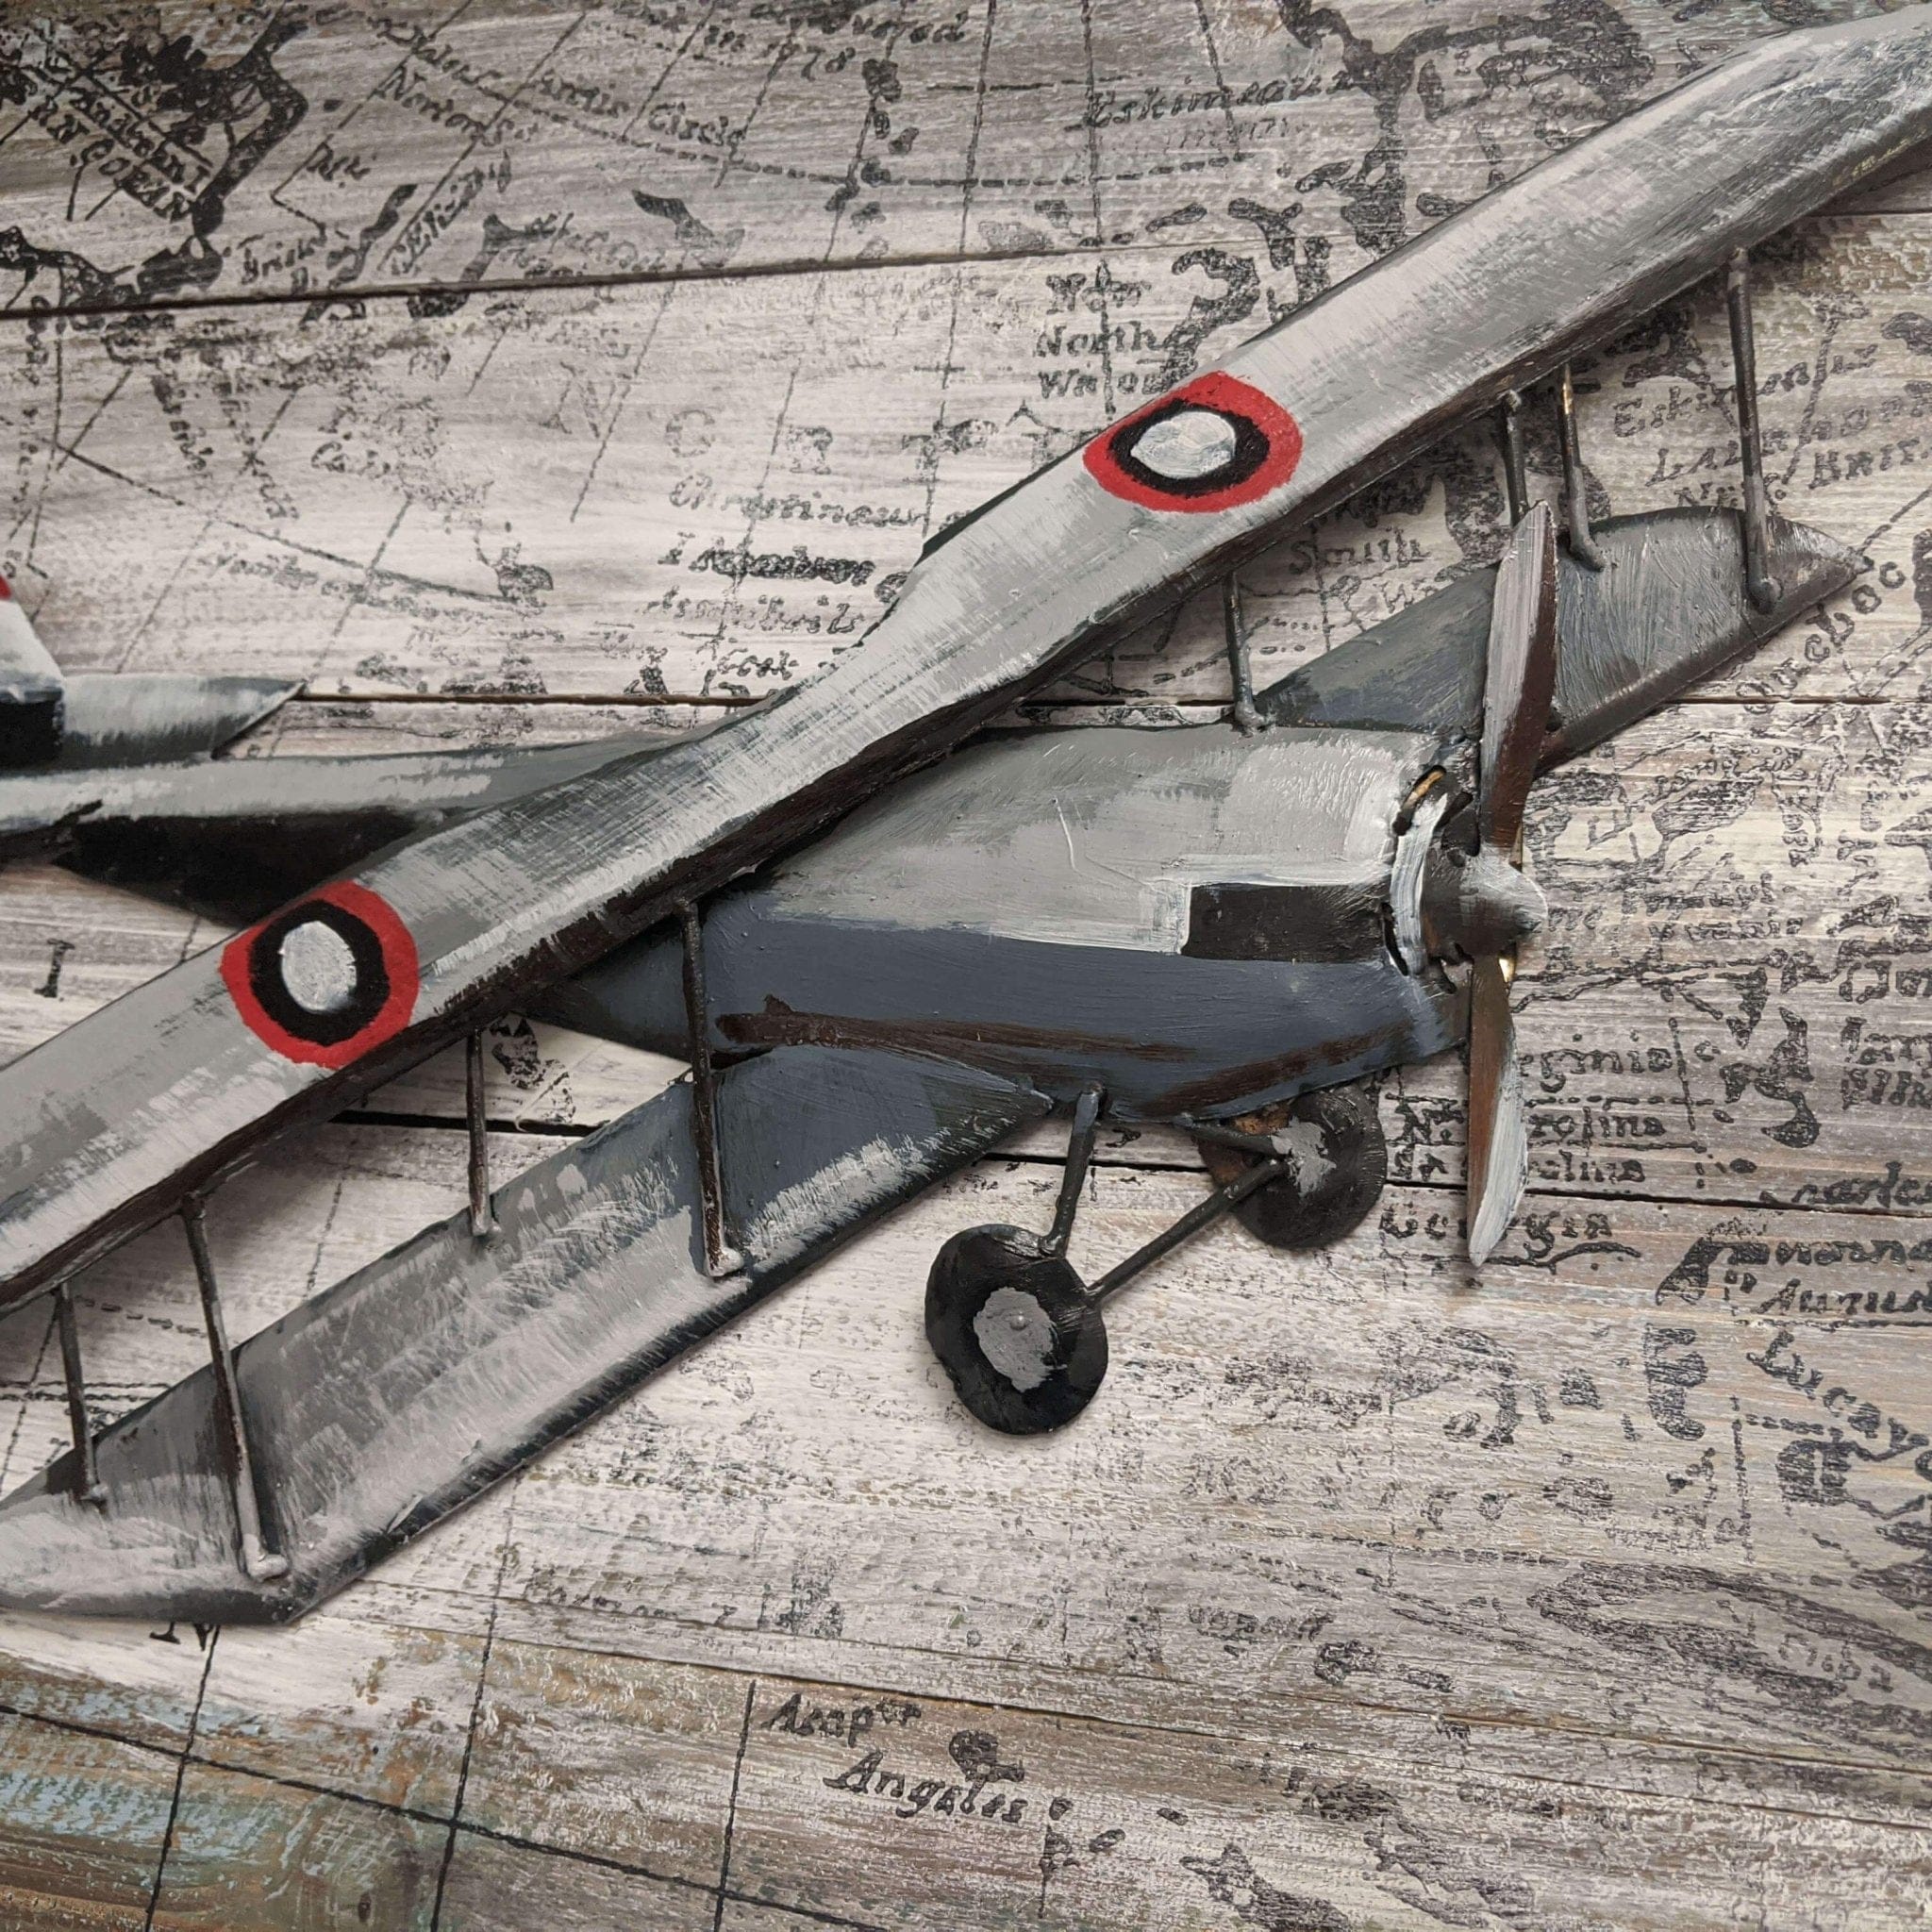 Pilot Toys Bygone Biplane Mixed Media Art Set